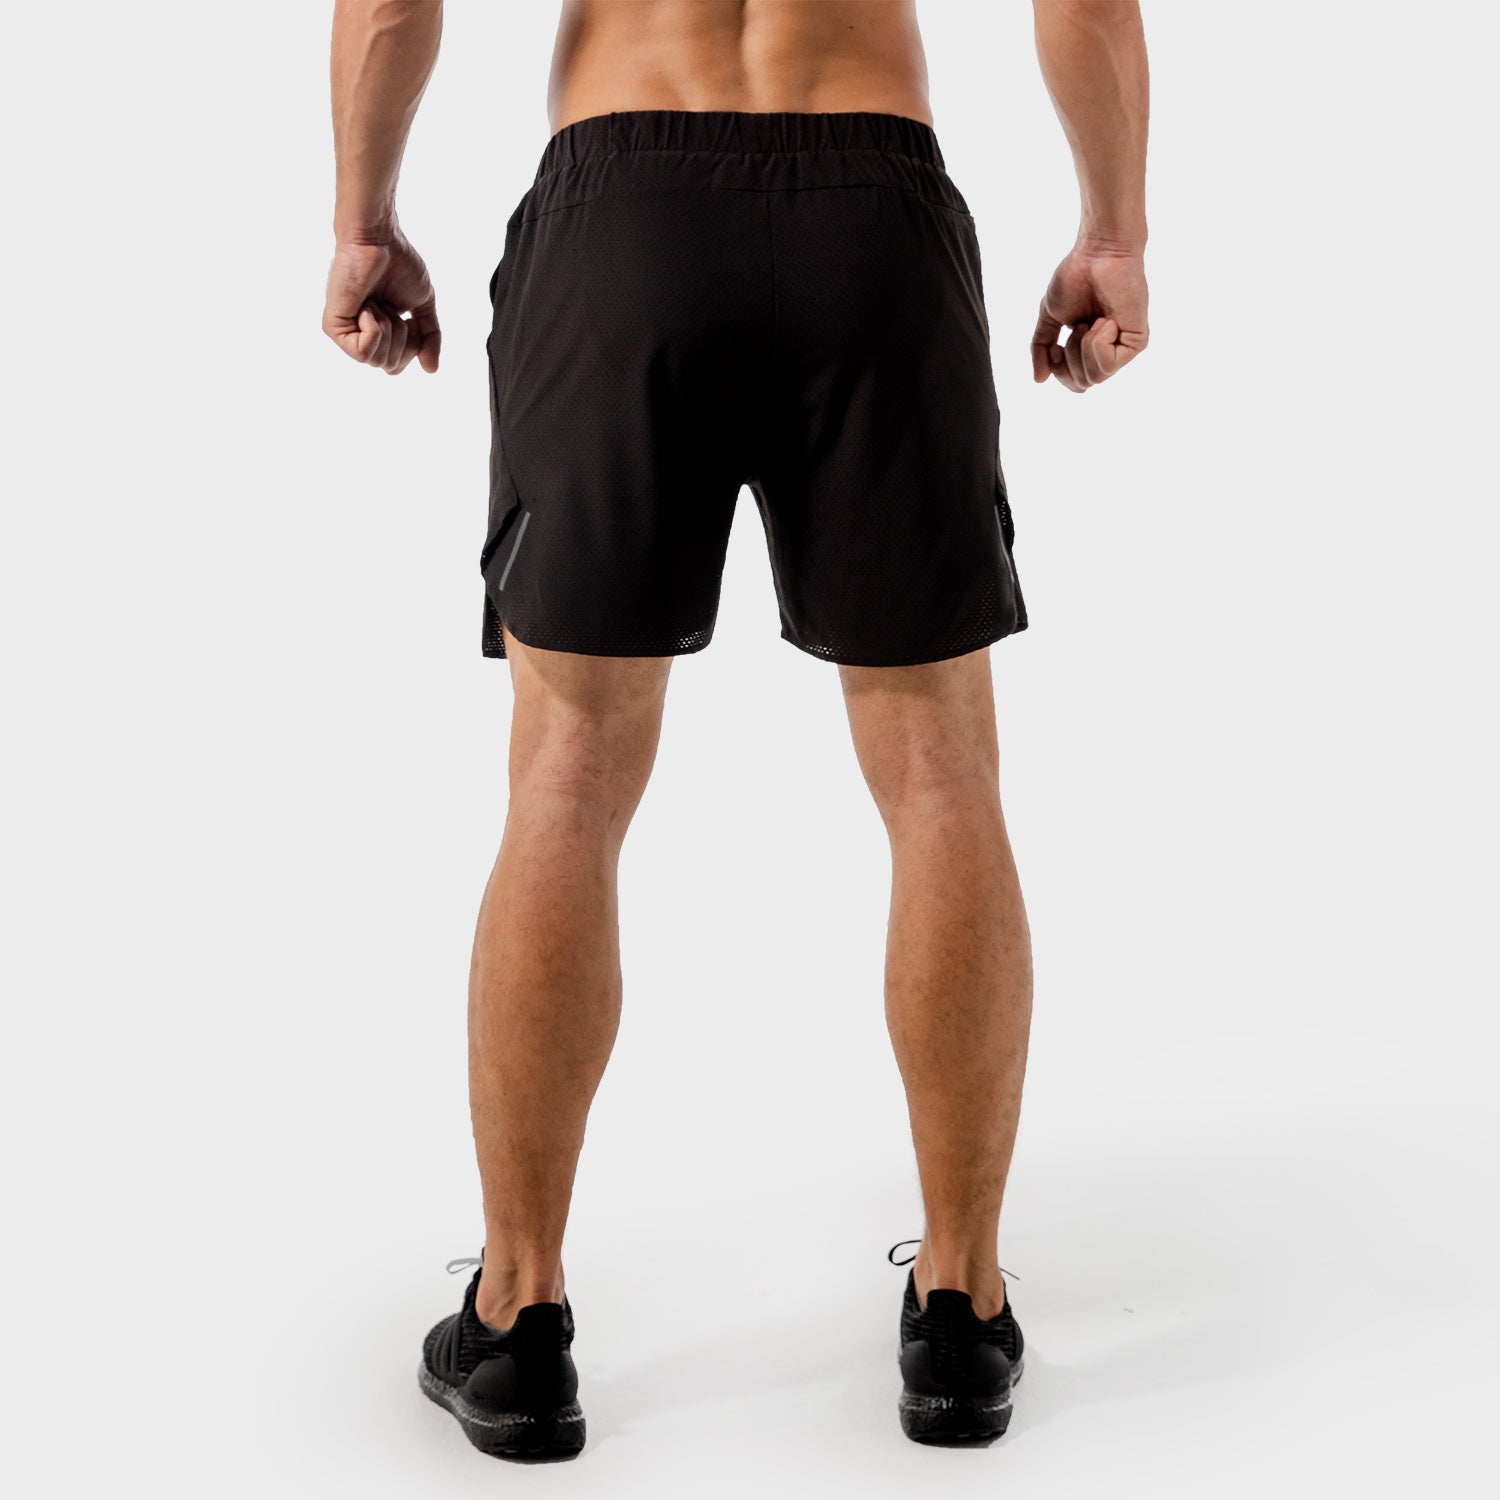 AE | 2-in-1 Dry Tech Shorts 2.0 - Black | Gym Shorts Men | SQUATWOLF